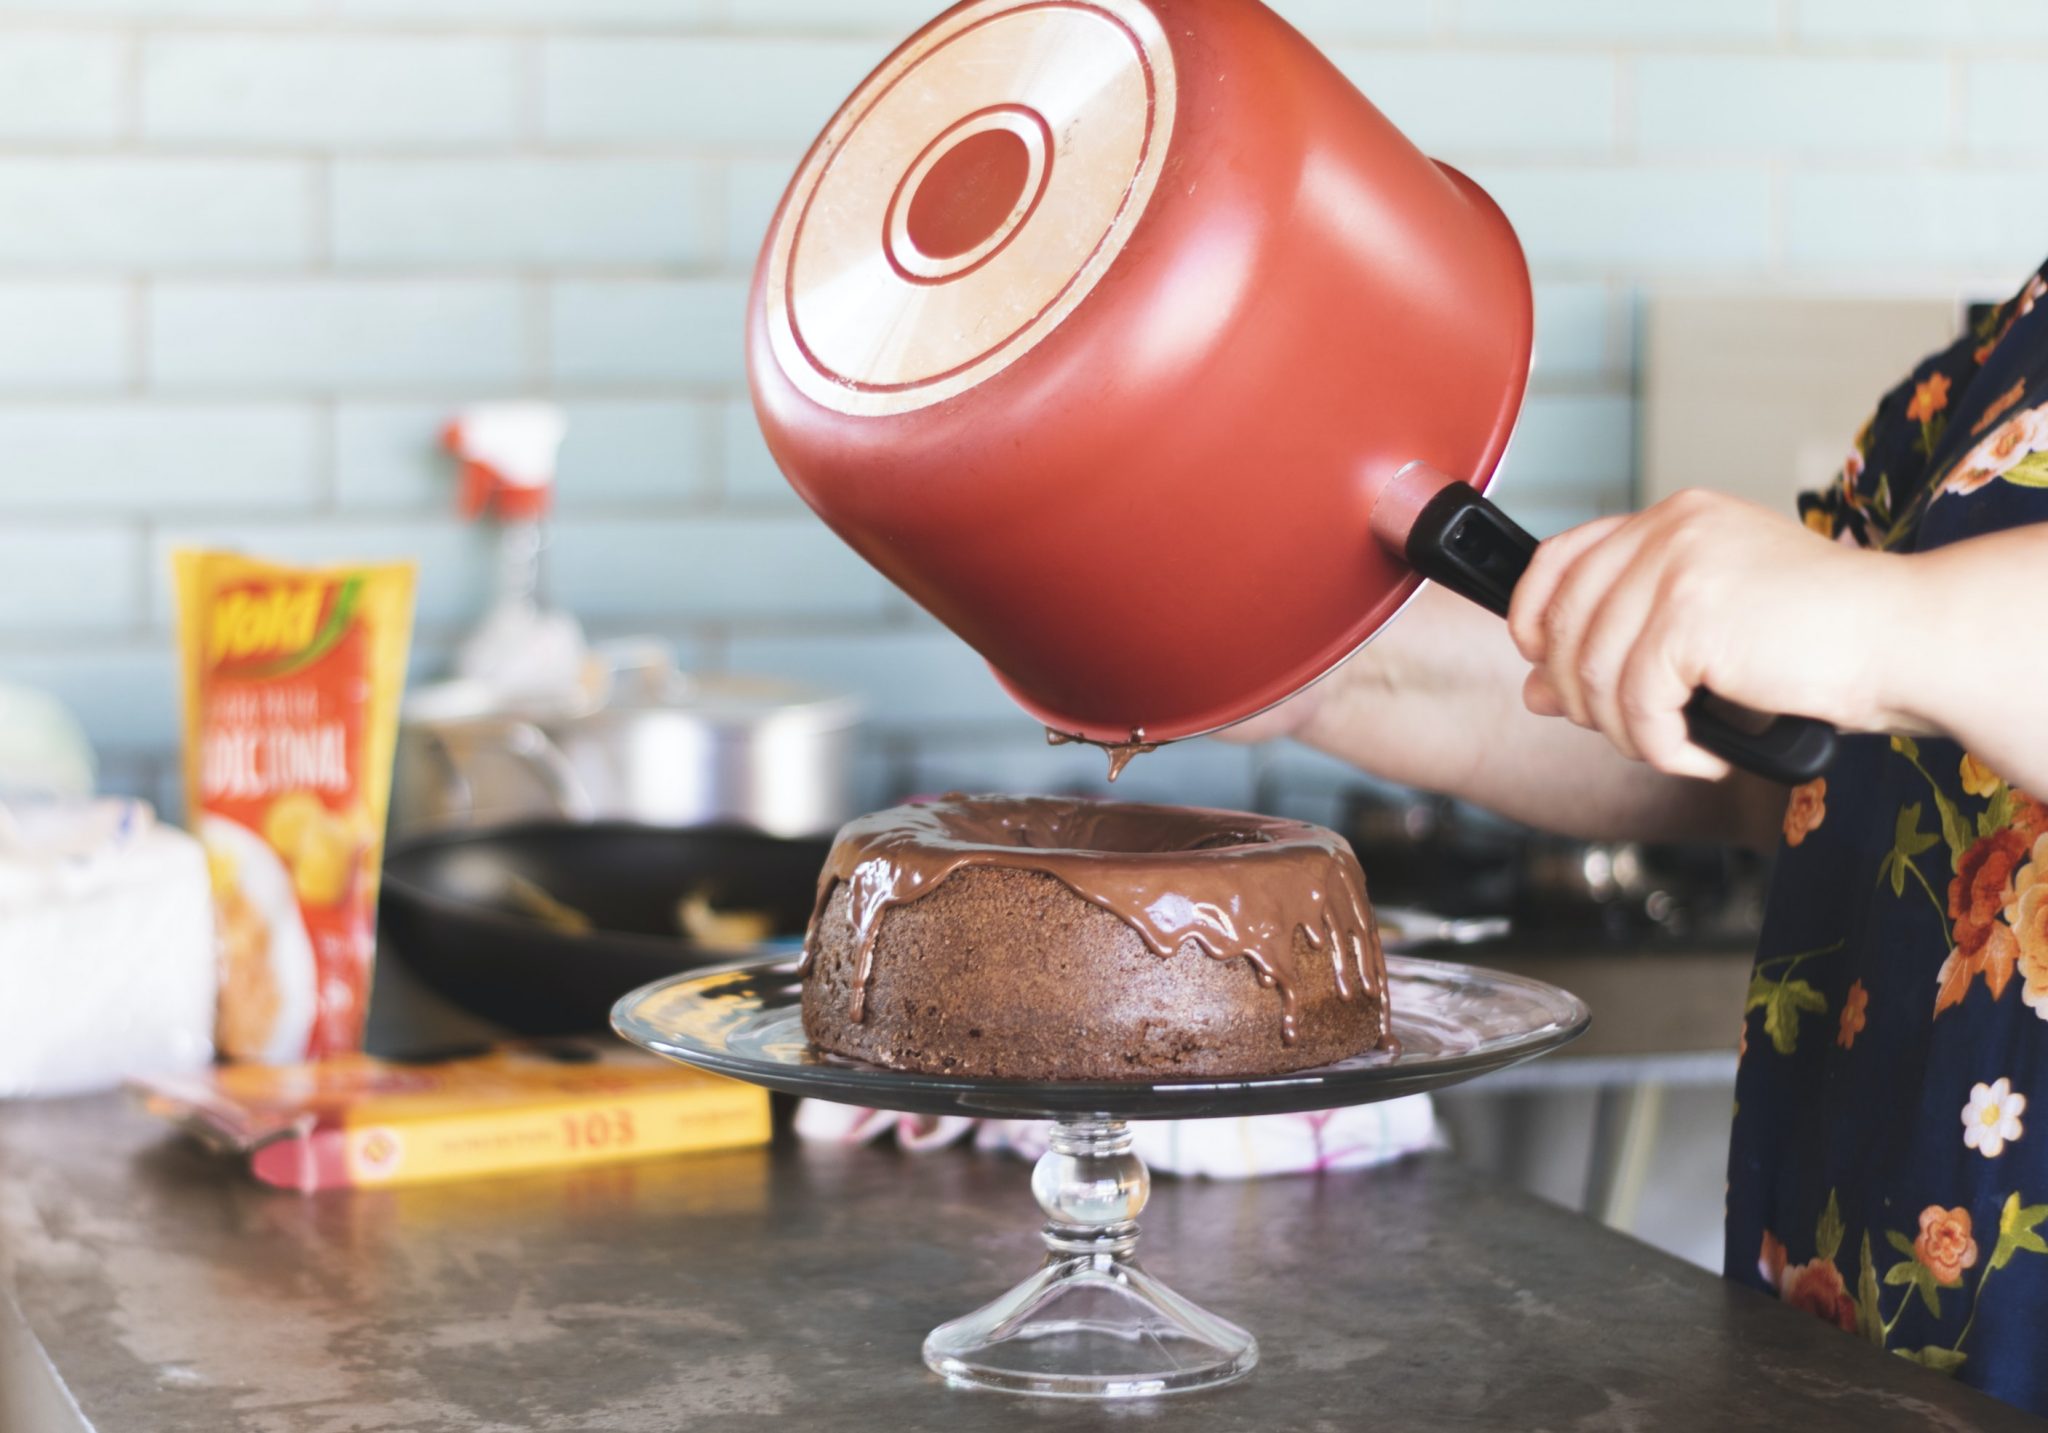 Recipe – Bent on Food’s gluten-free flourless chocolate cake